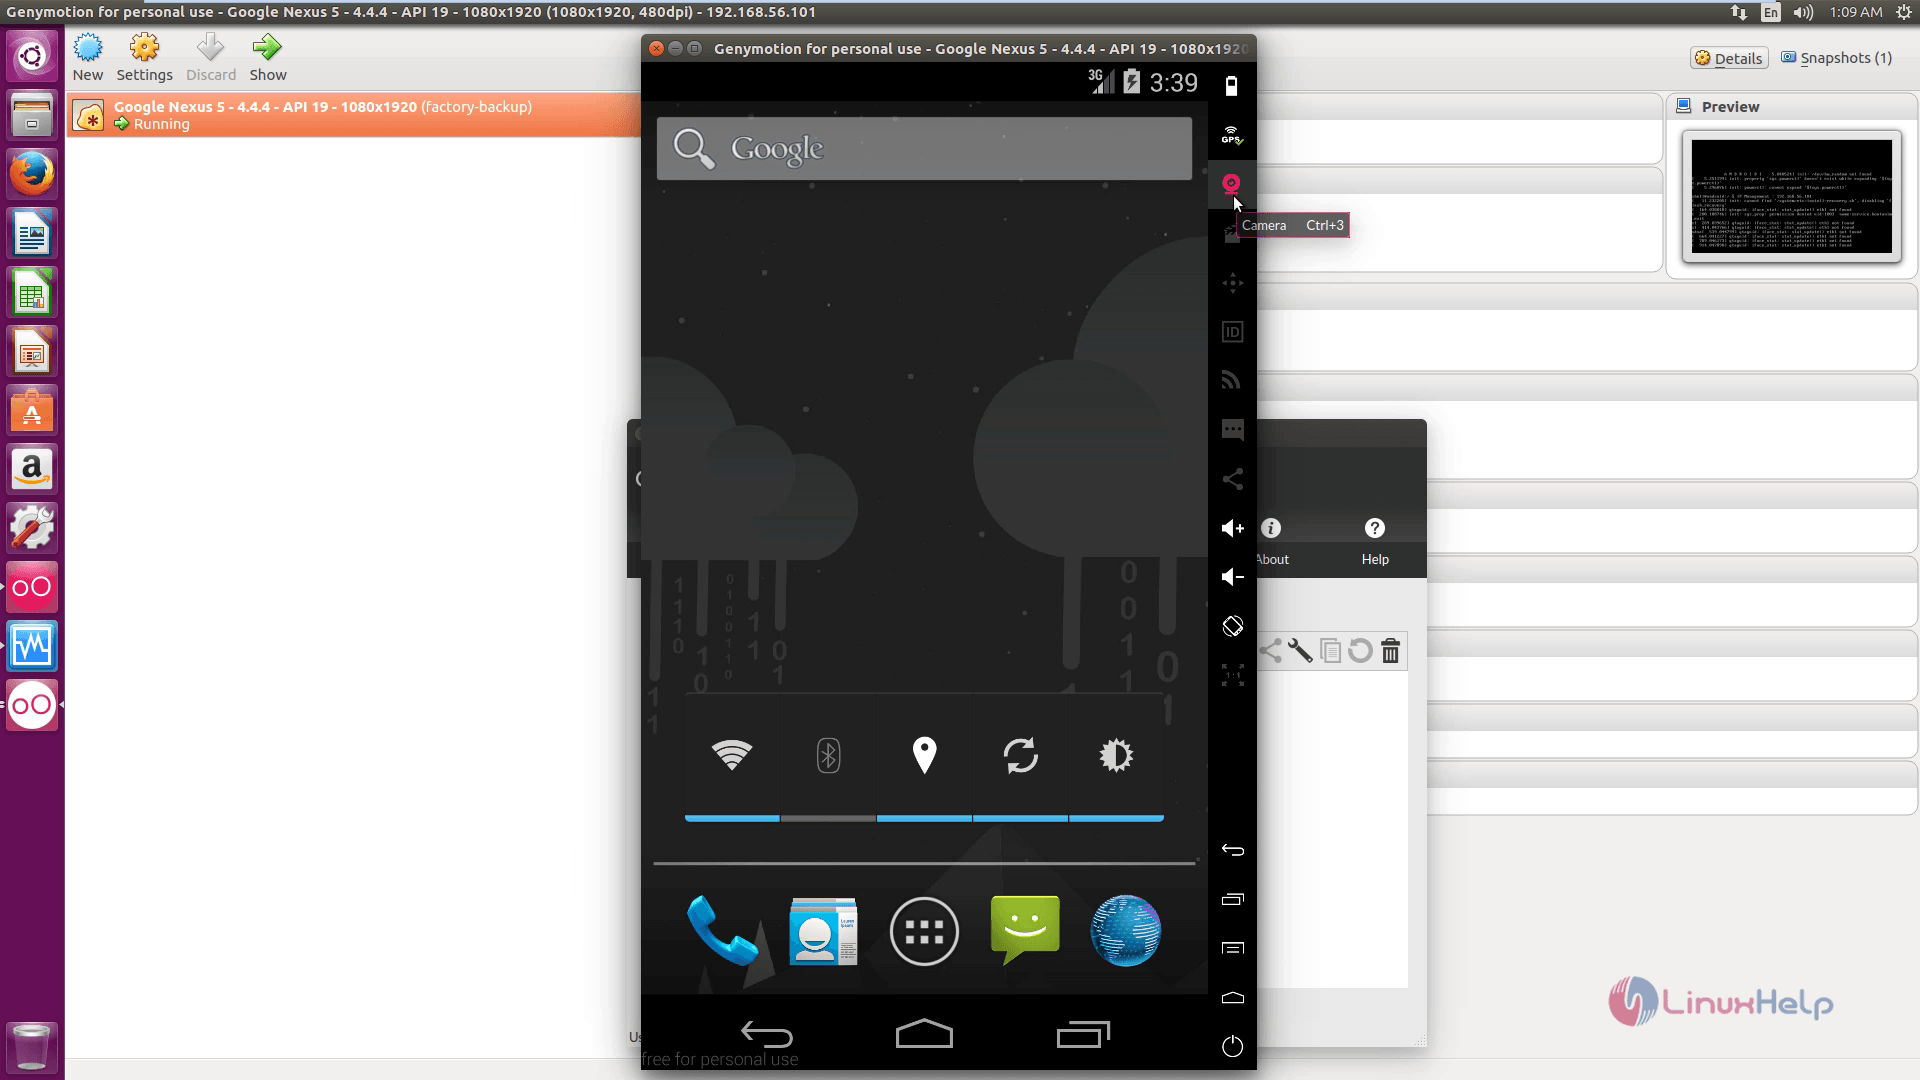 run-Android-Apps-Ubuntu-Genymotion-Emulator-testing-and-presentation-view-camera-icon